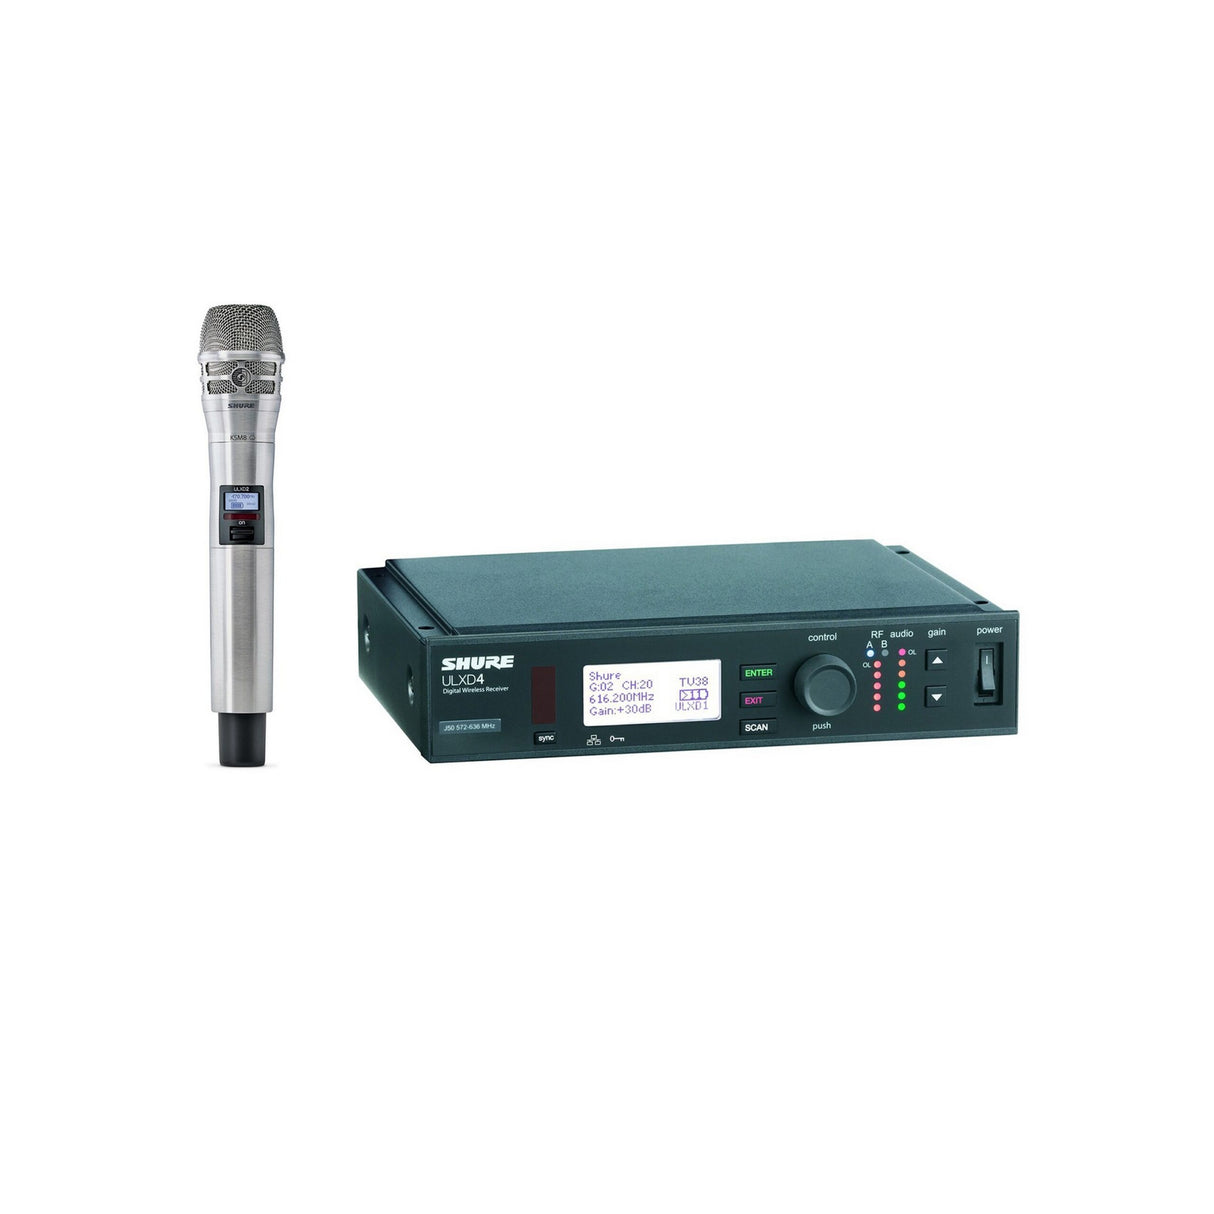 Shure ULXD24/K8N Handheld Wireless Microphone System, H50 534-598 MHz